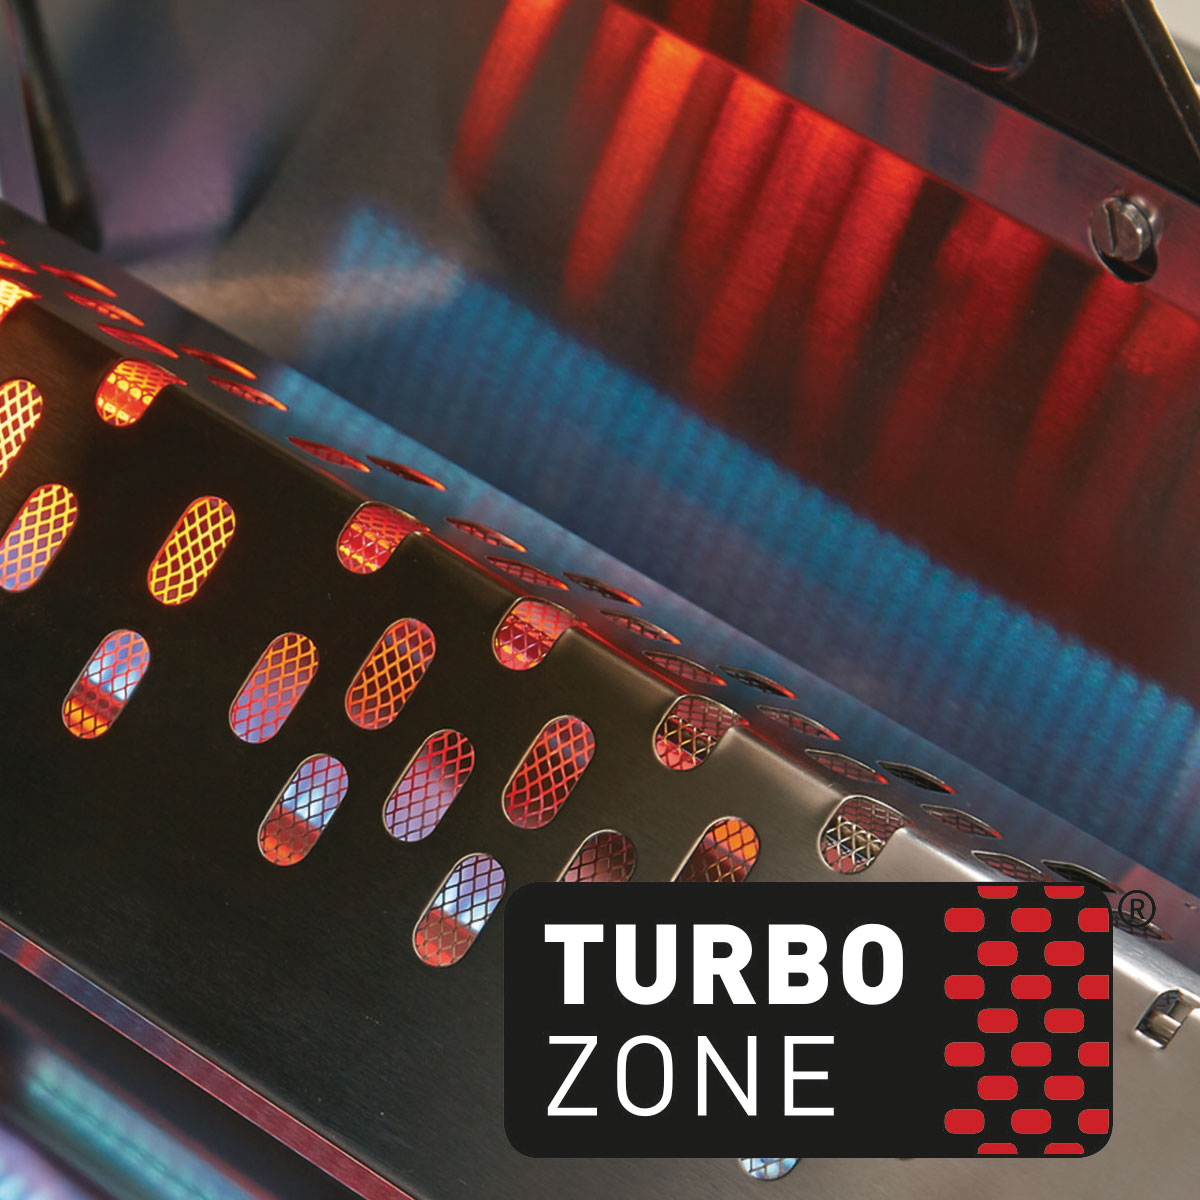 Enders Kansas II Pro 3 SIK Turbo mit 800°C Turbo Zone